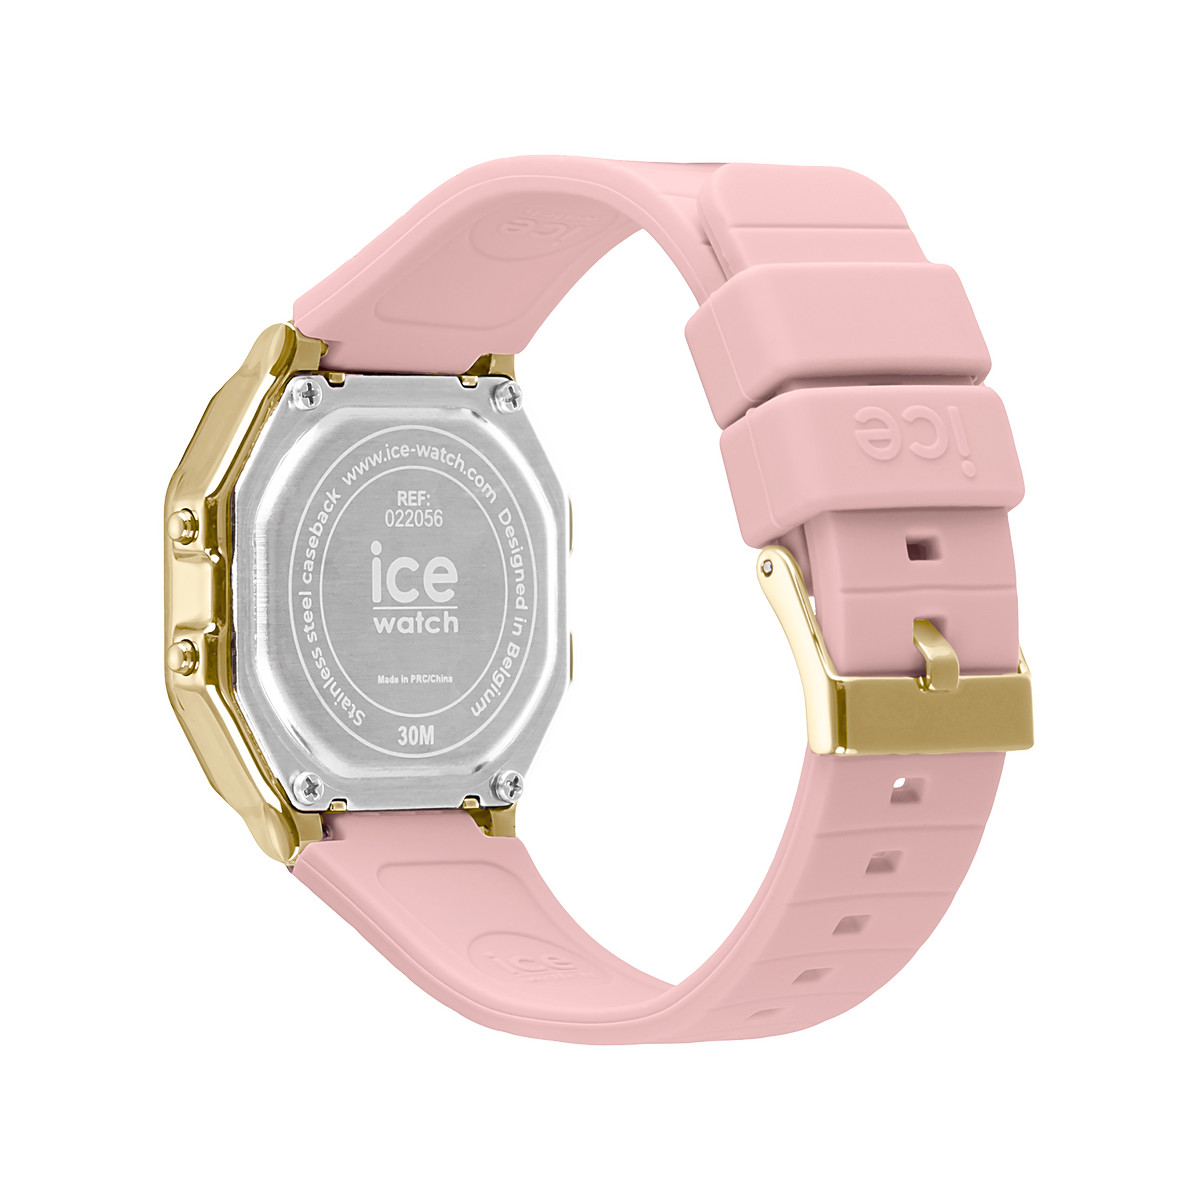 Montre ICE WATCH Ice digit retro femme bracelet silicone rose - vue 3